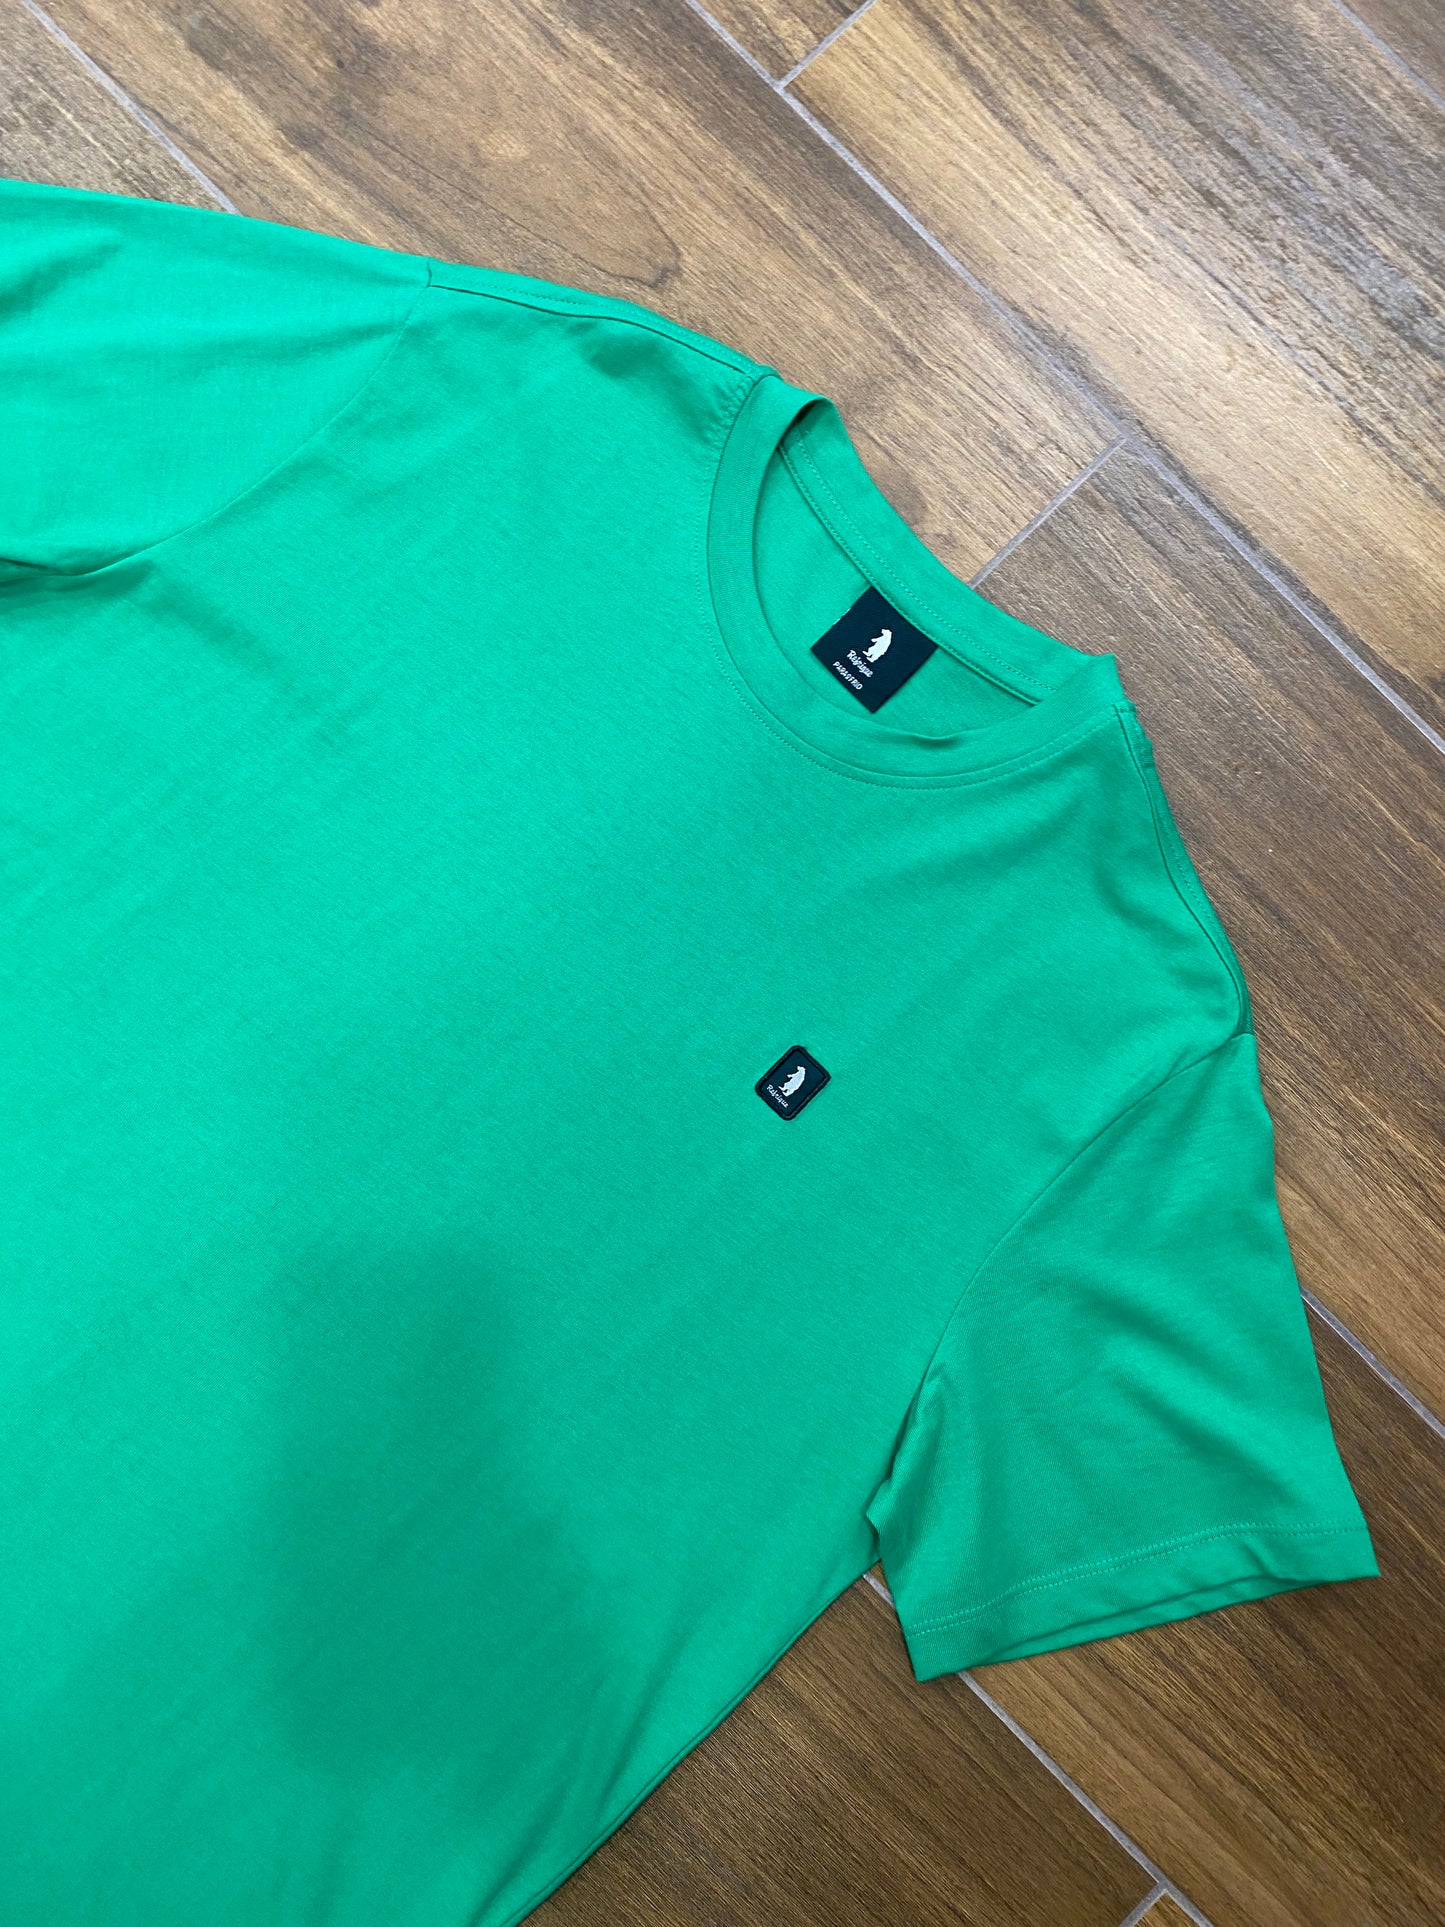 T-shirt basic Refrigue verde